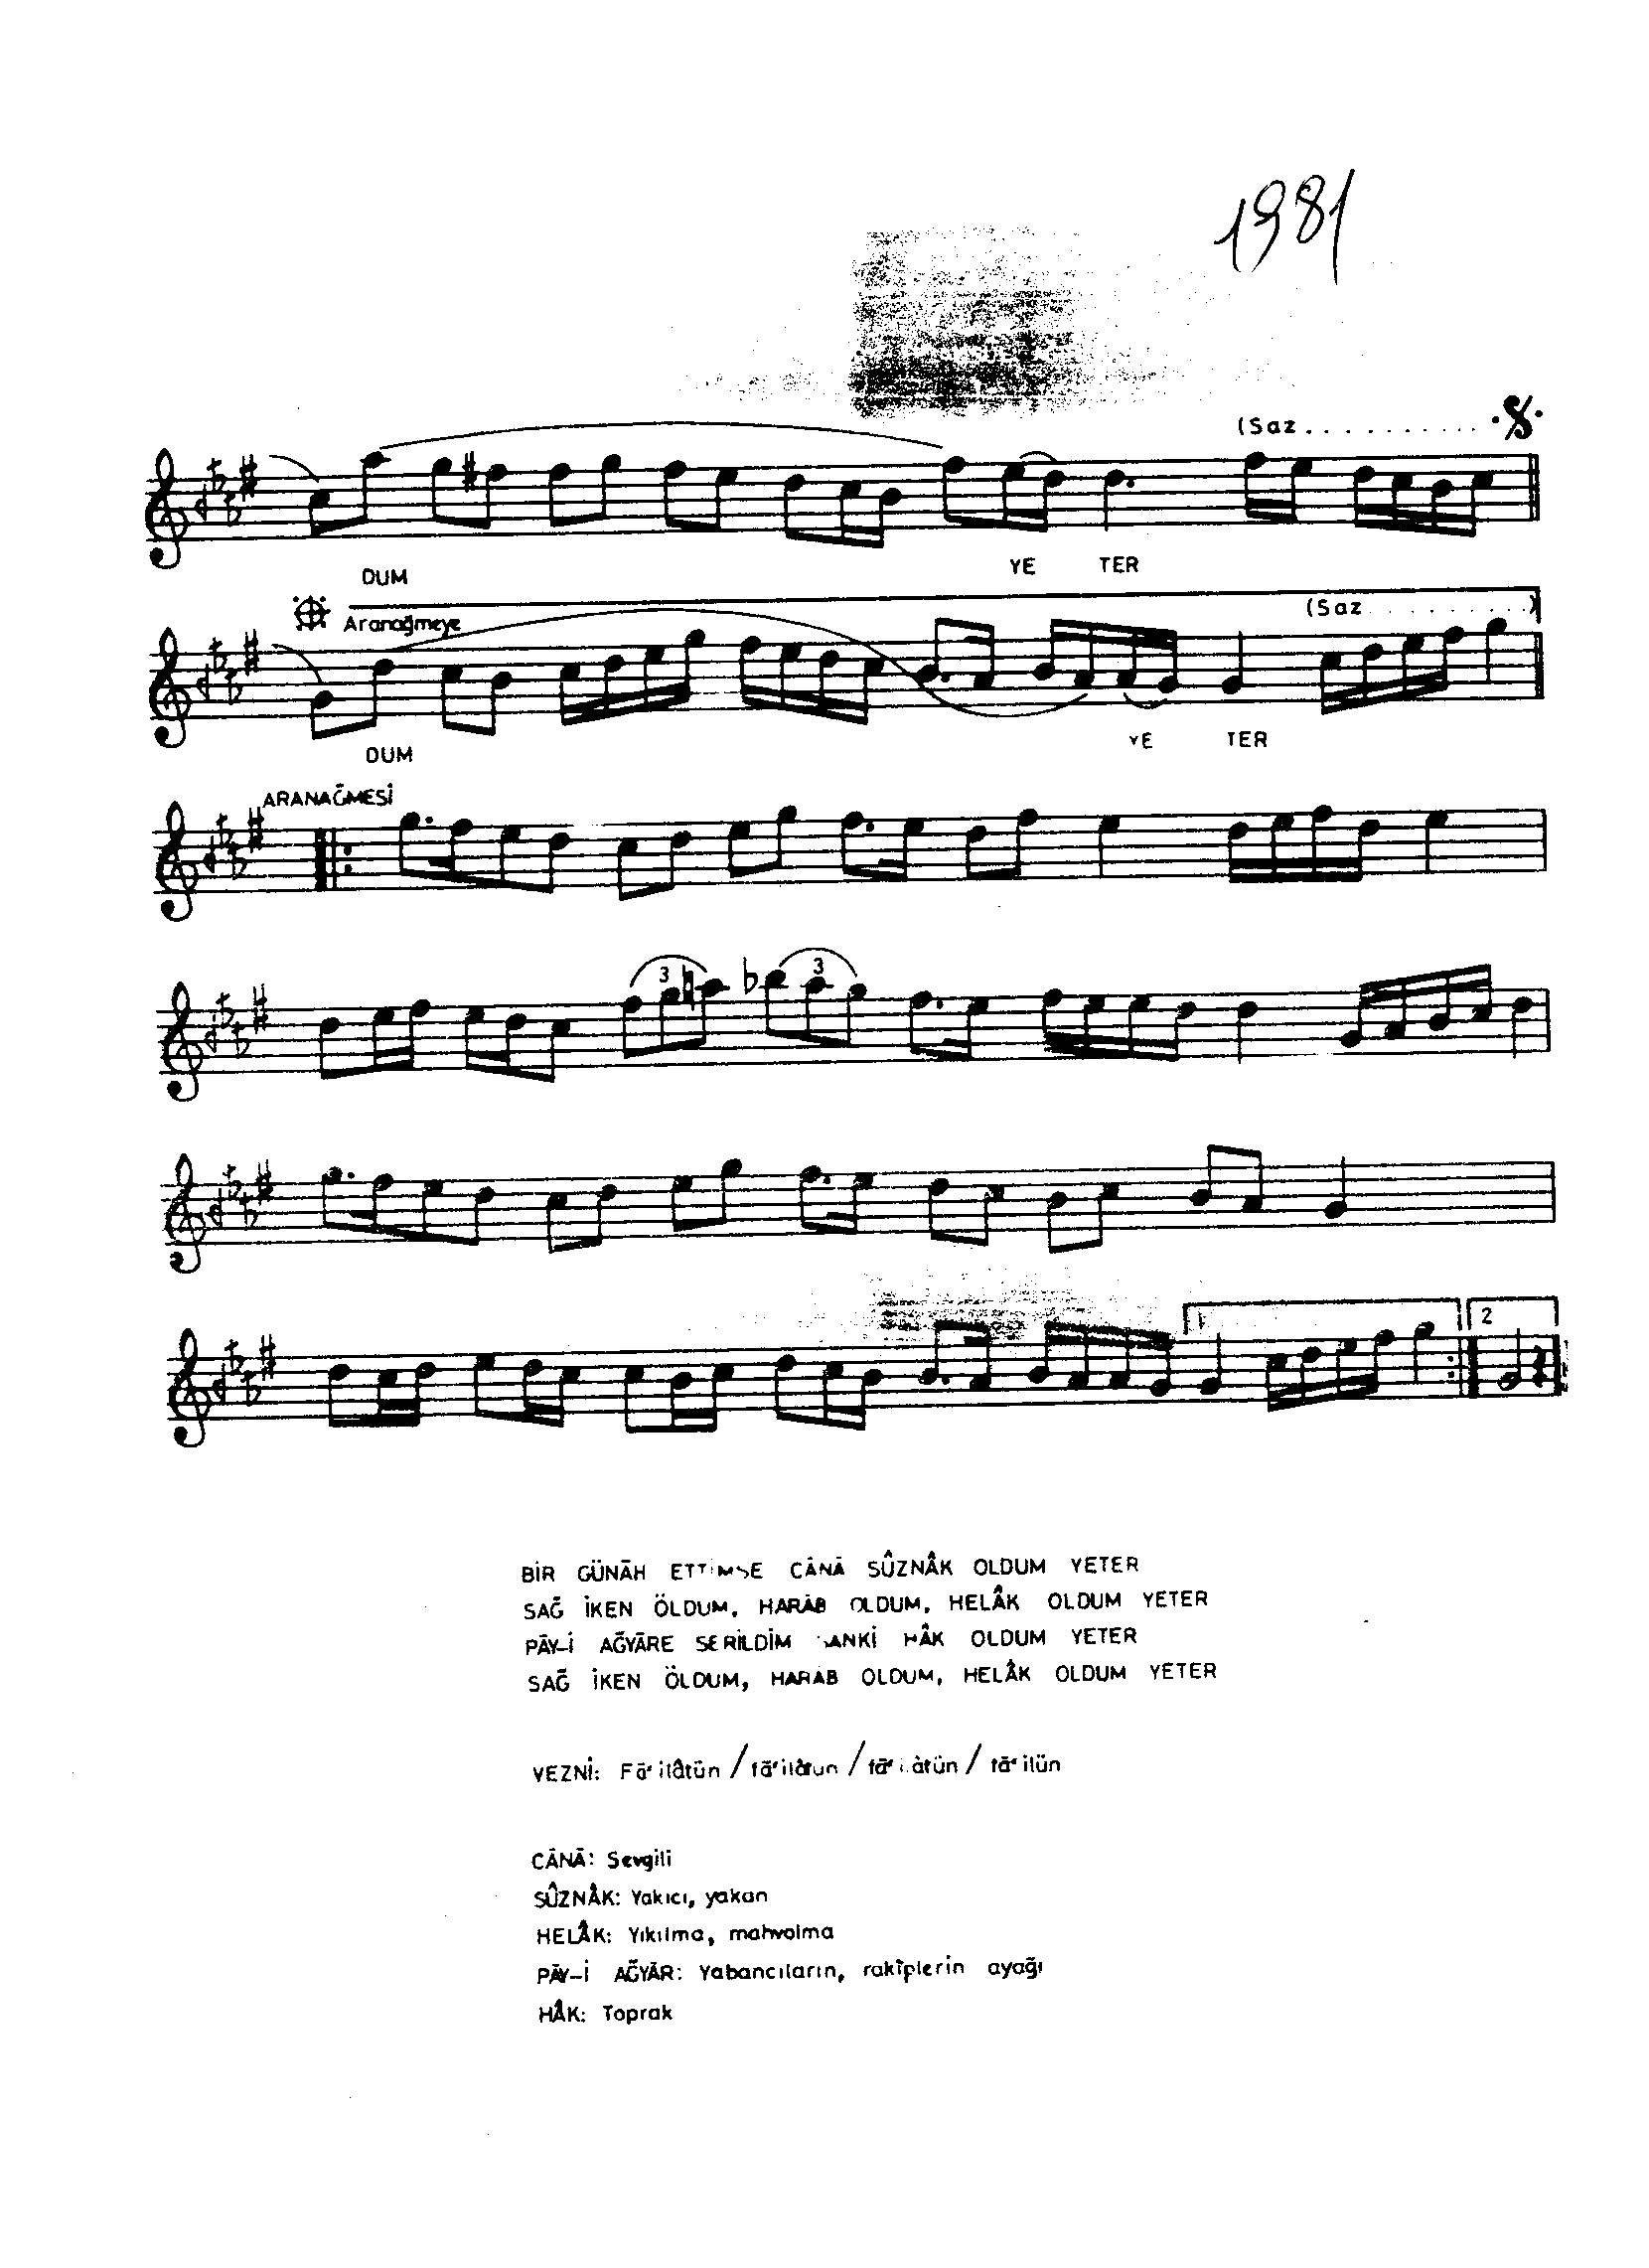 Sûz-Nâk - Şarkı - Selânik'li Ahmet Efendi - Sayfa 2